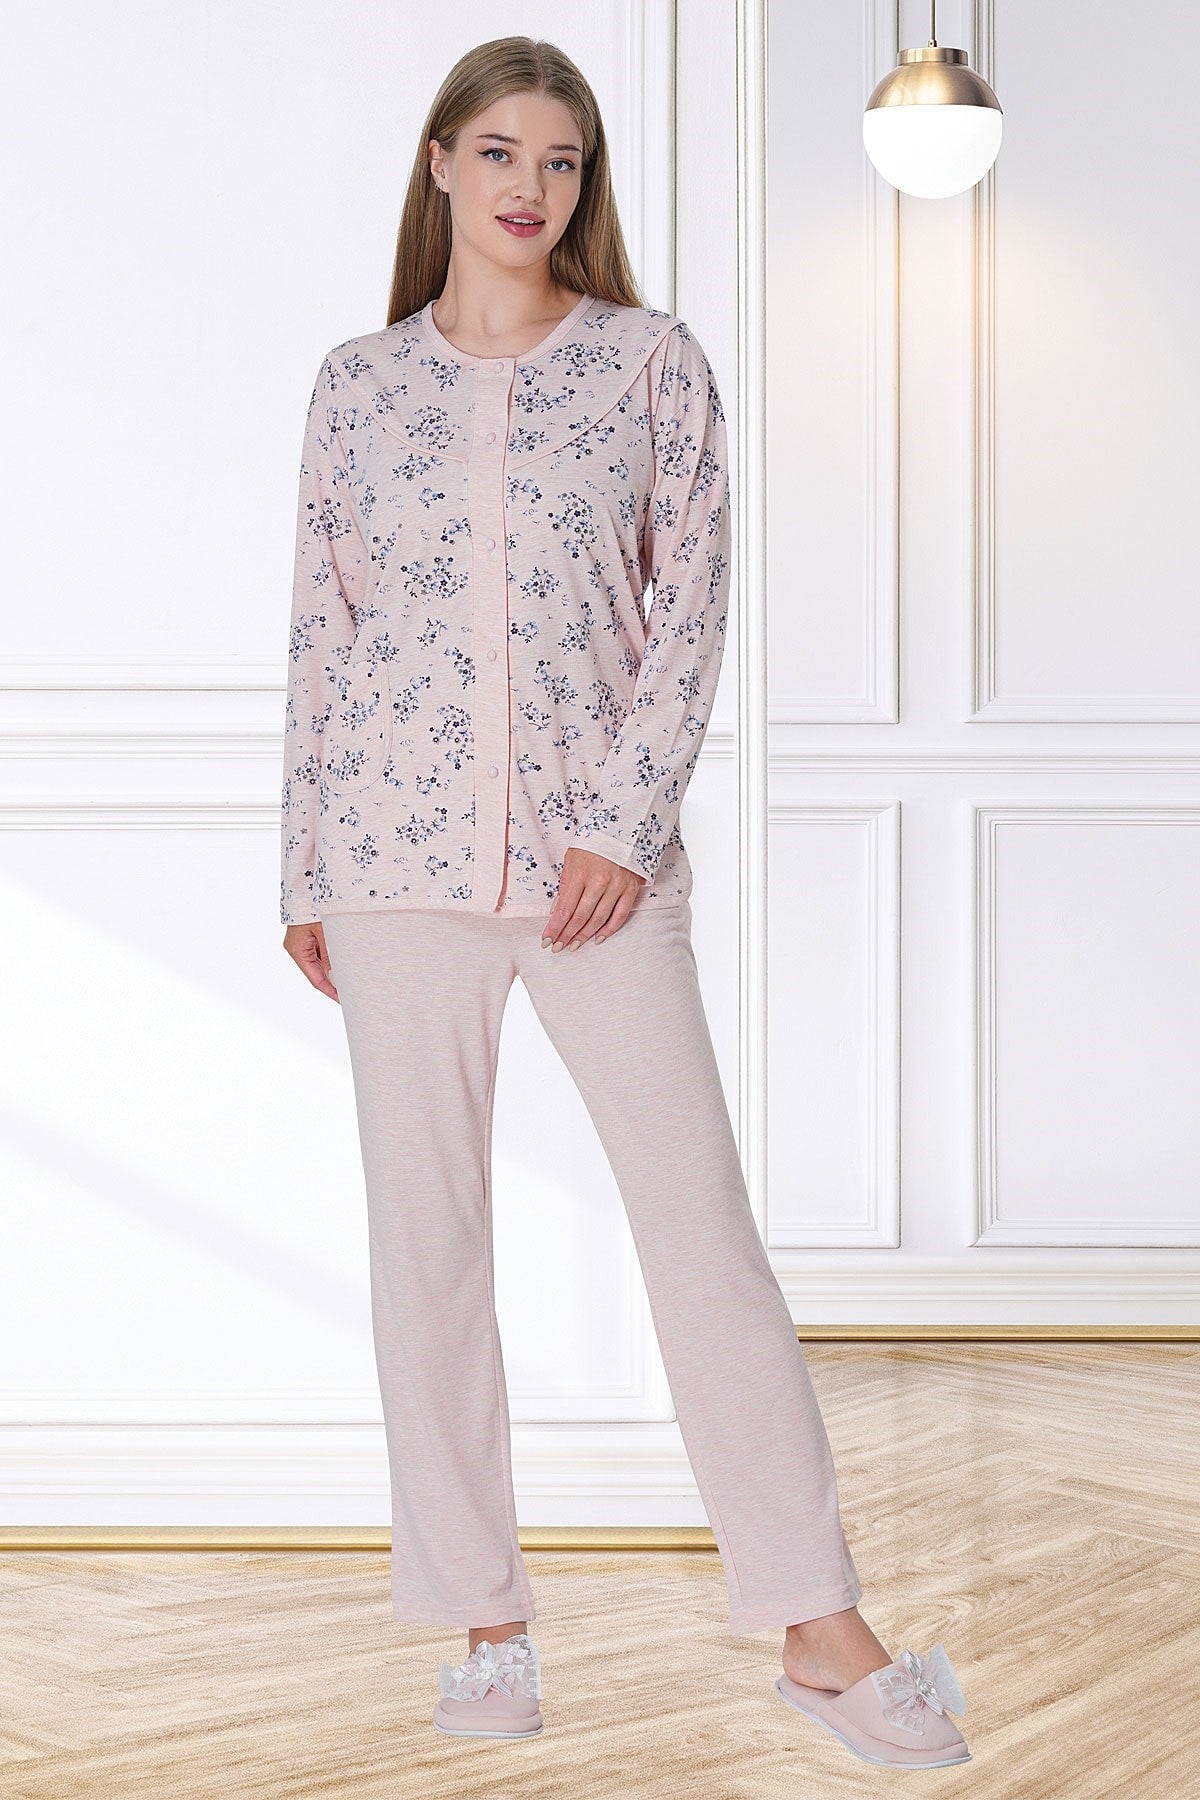 Shopymommy 5737 Flowery Plus Size Maternity & Nursing Pajamas Pink